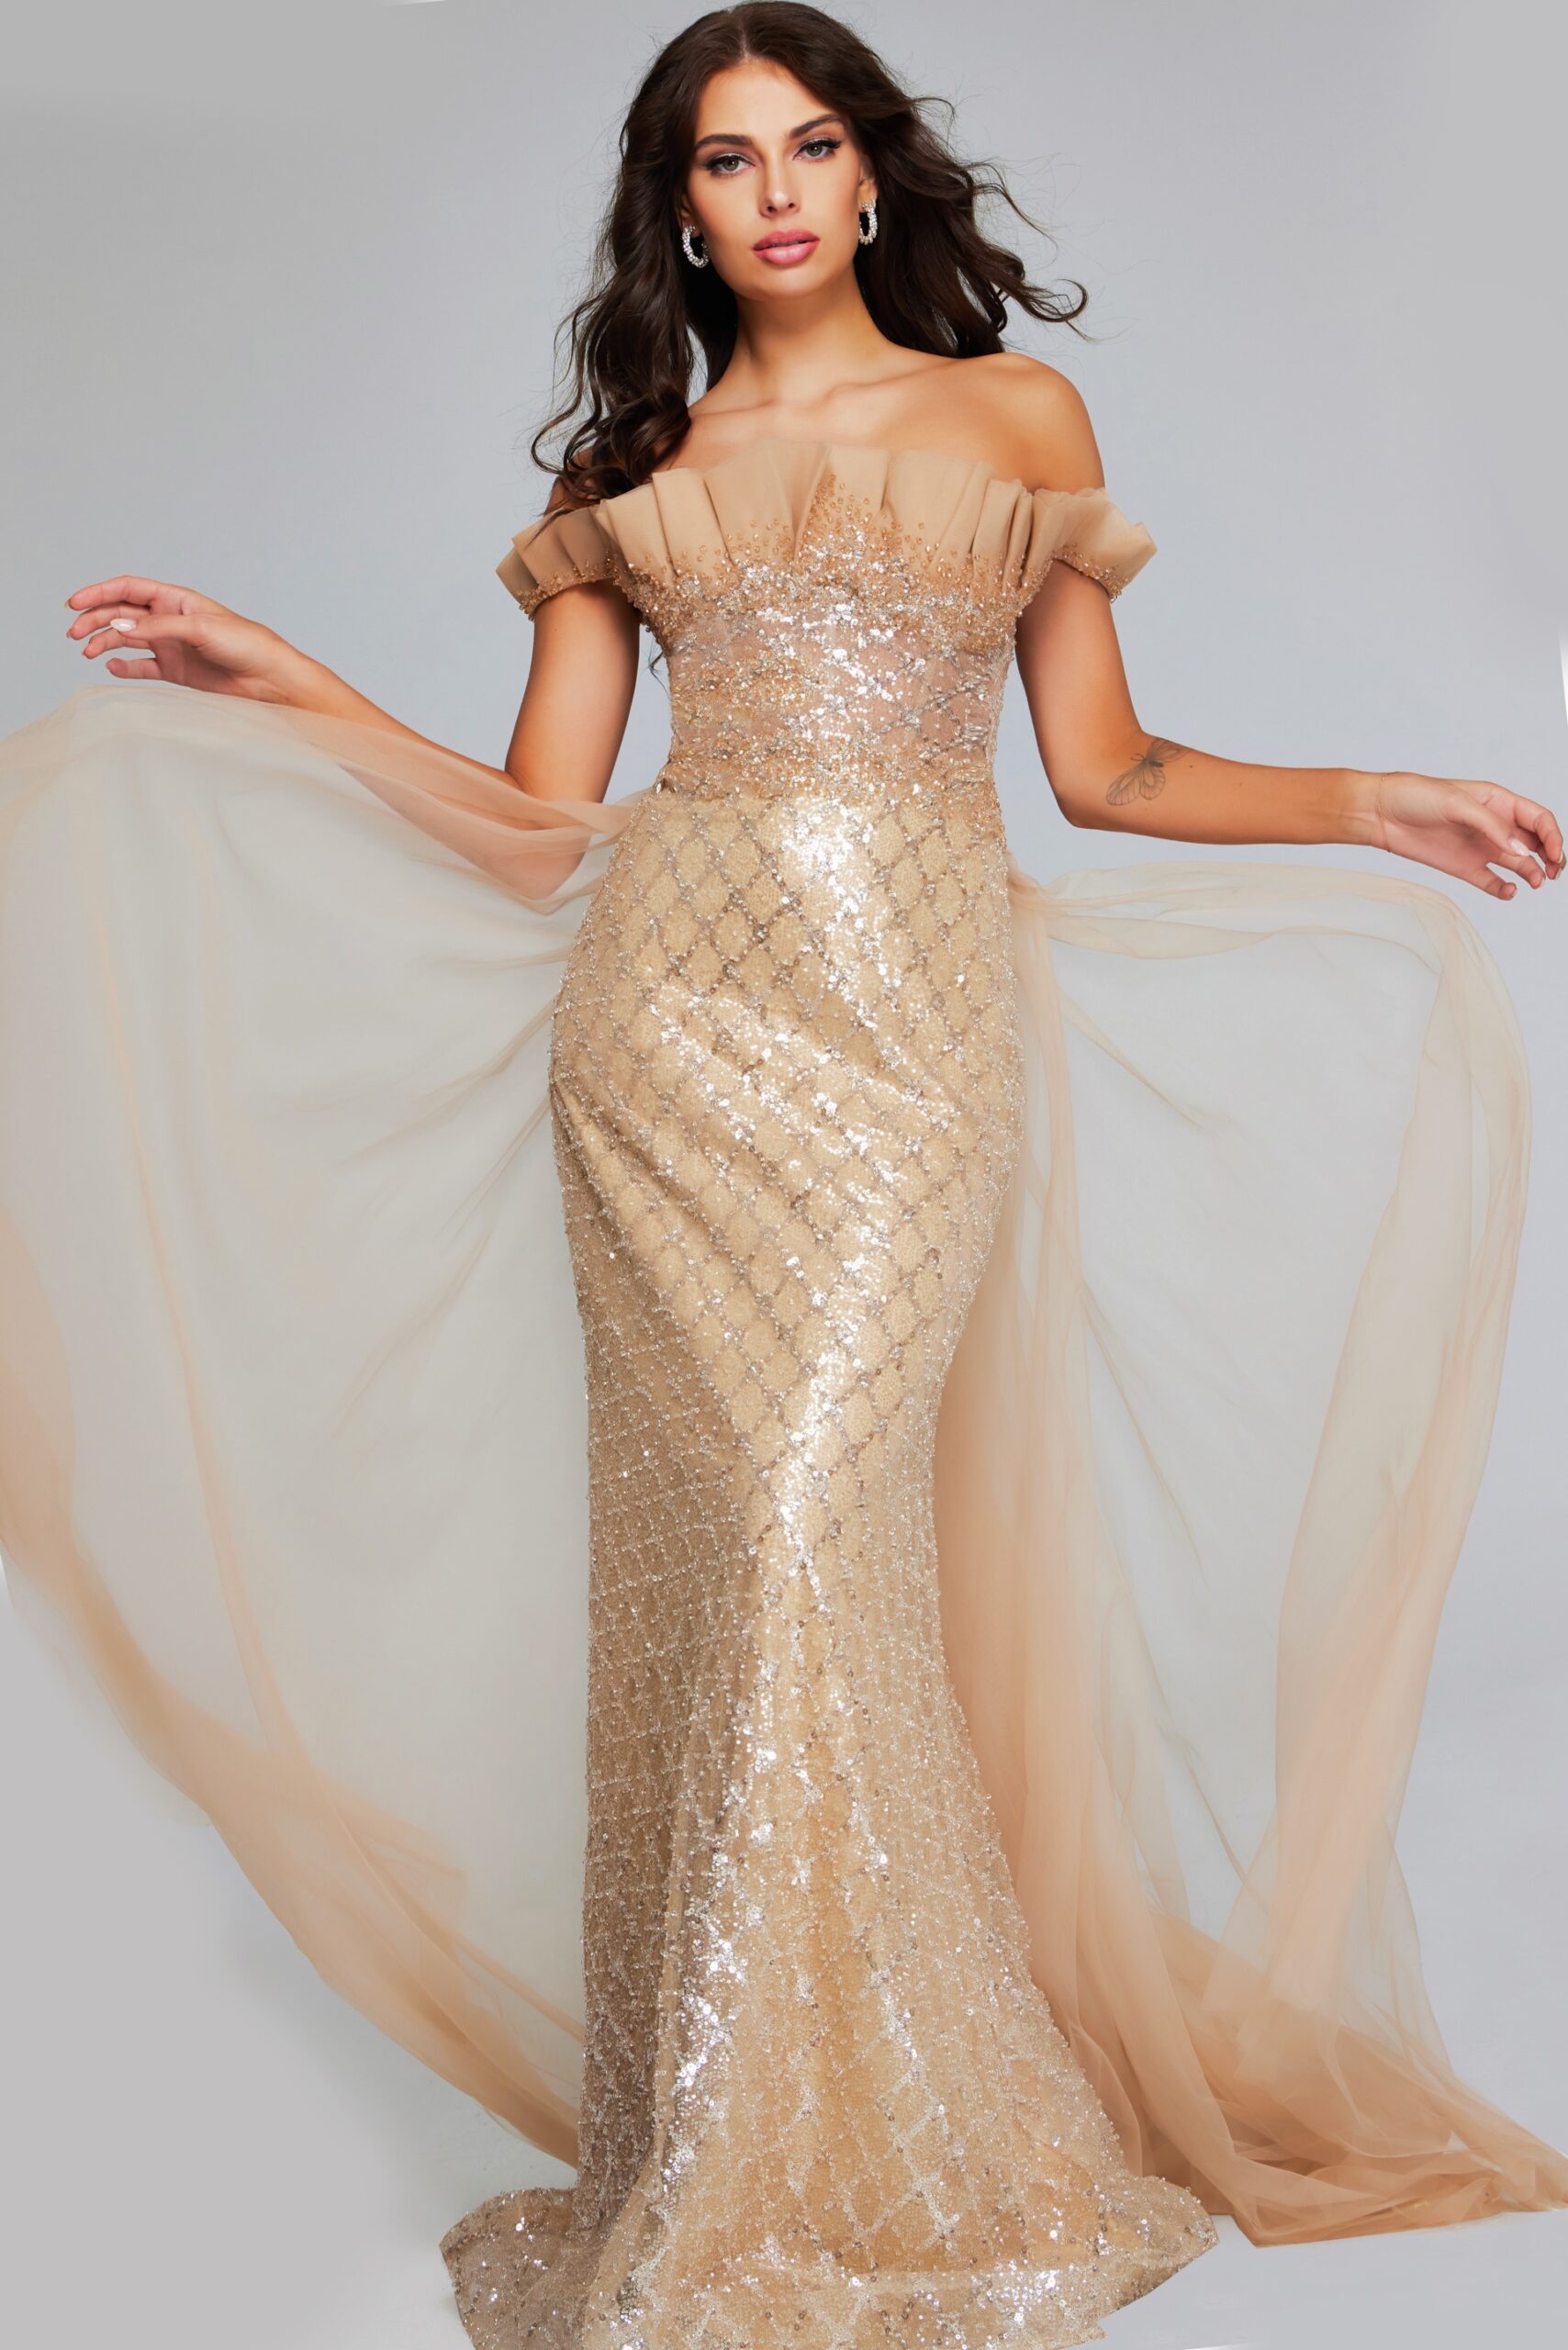 Model wearing Gold Off-Shoulder Sequin Gown 39389